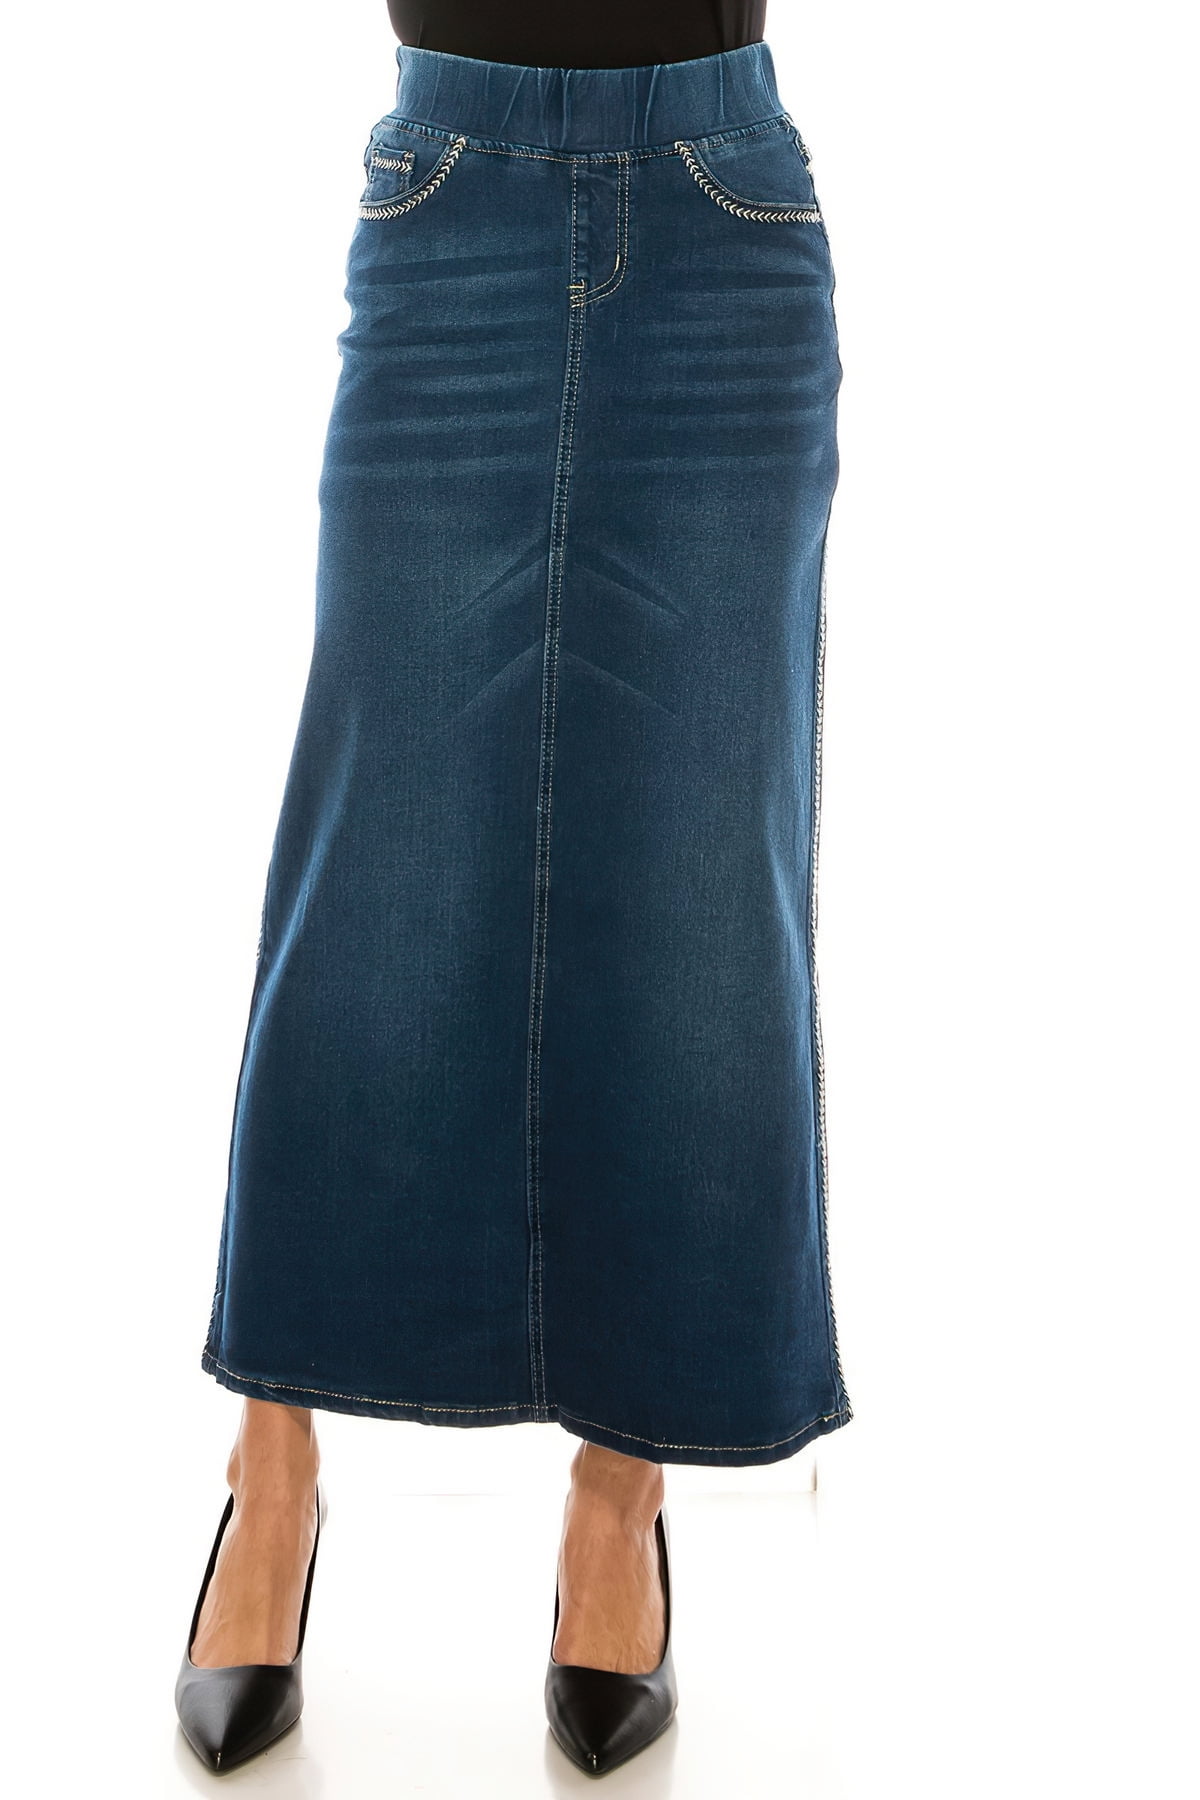 Fashion2Love Women's Juniors/Plus Size Stretch Denim Long Skirt with ...